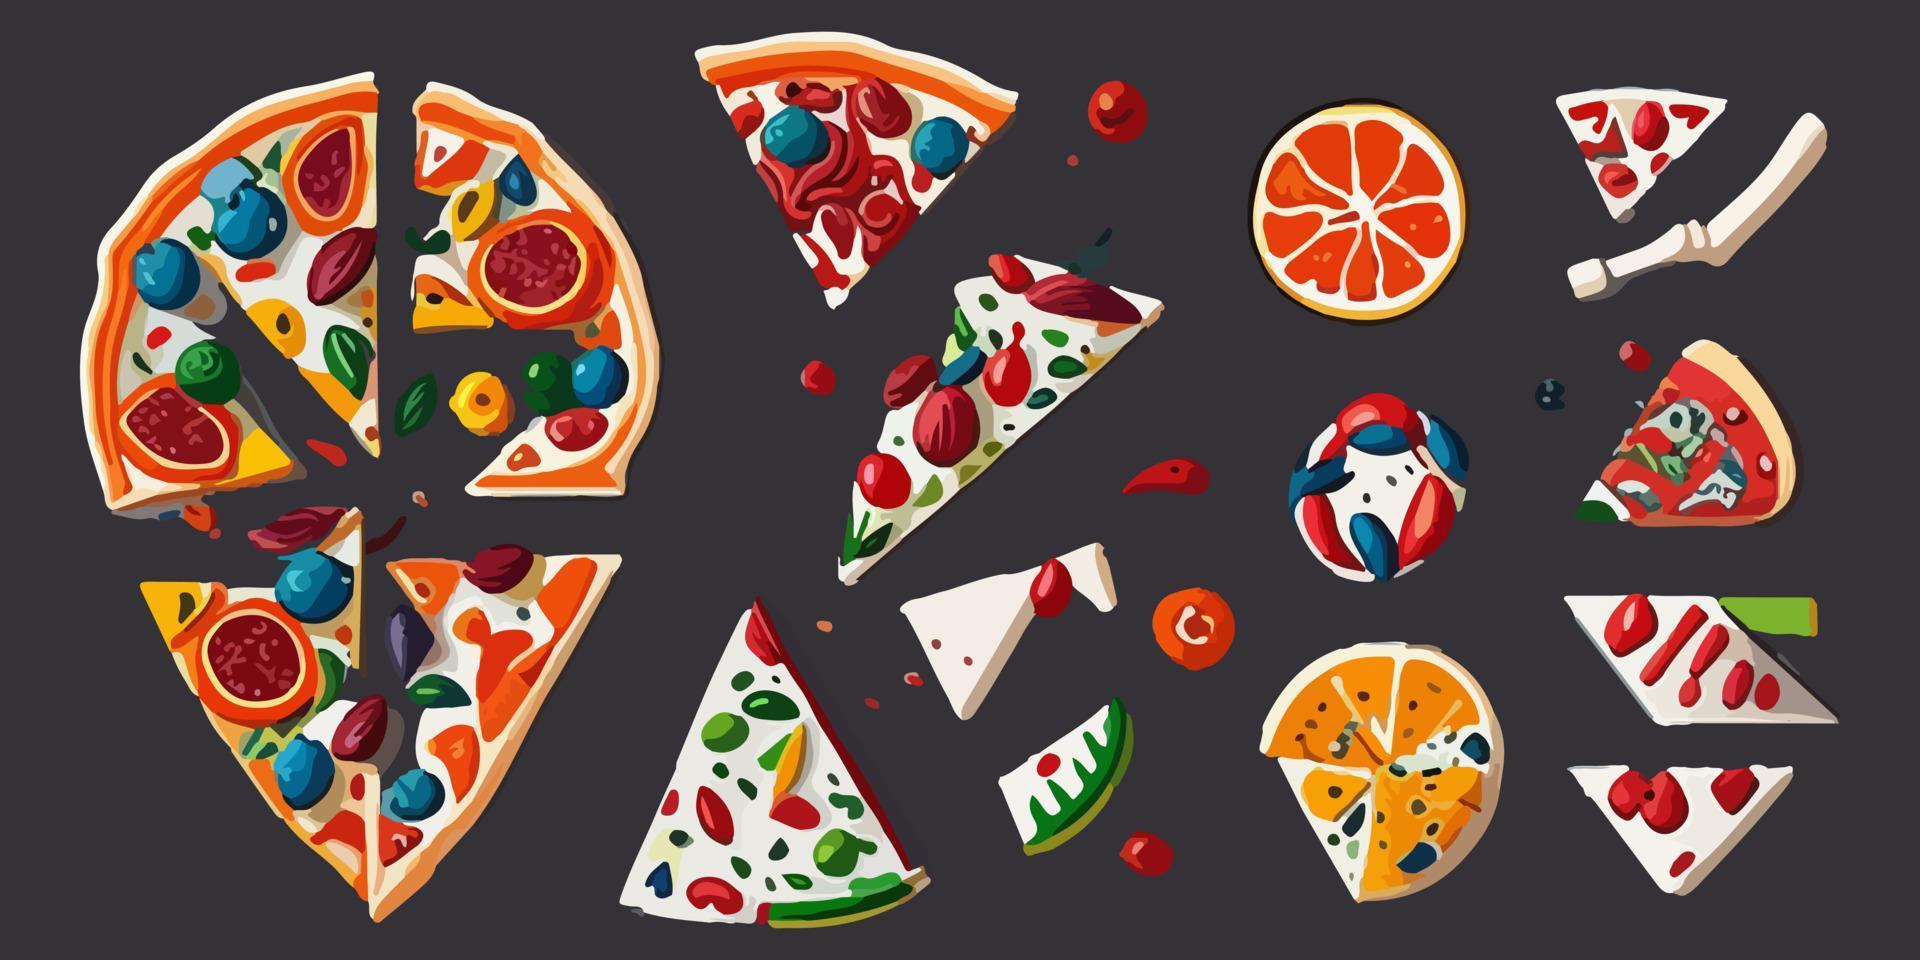 Delicious Flat Vector Illustration of a Pizza Menu Design